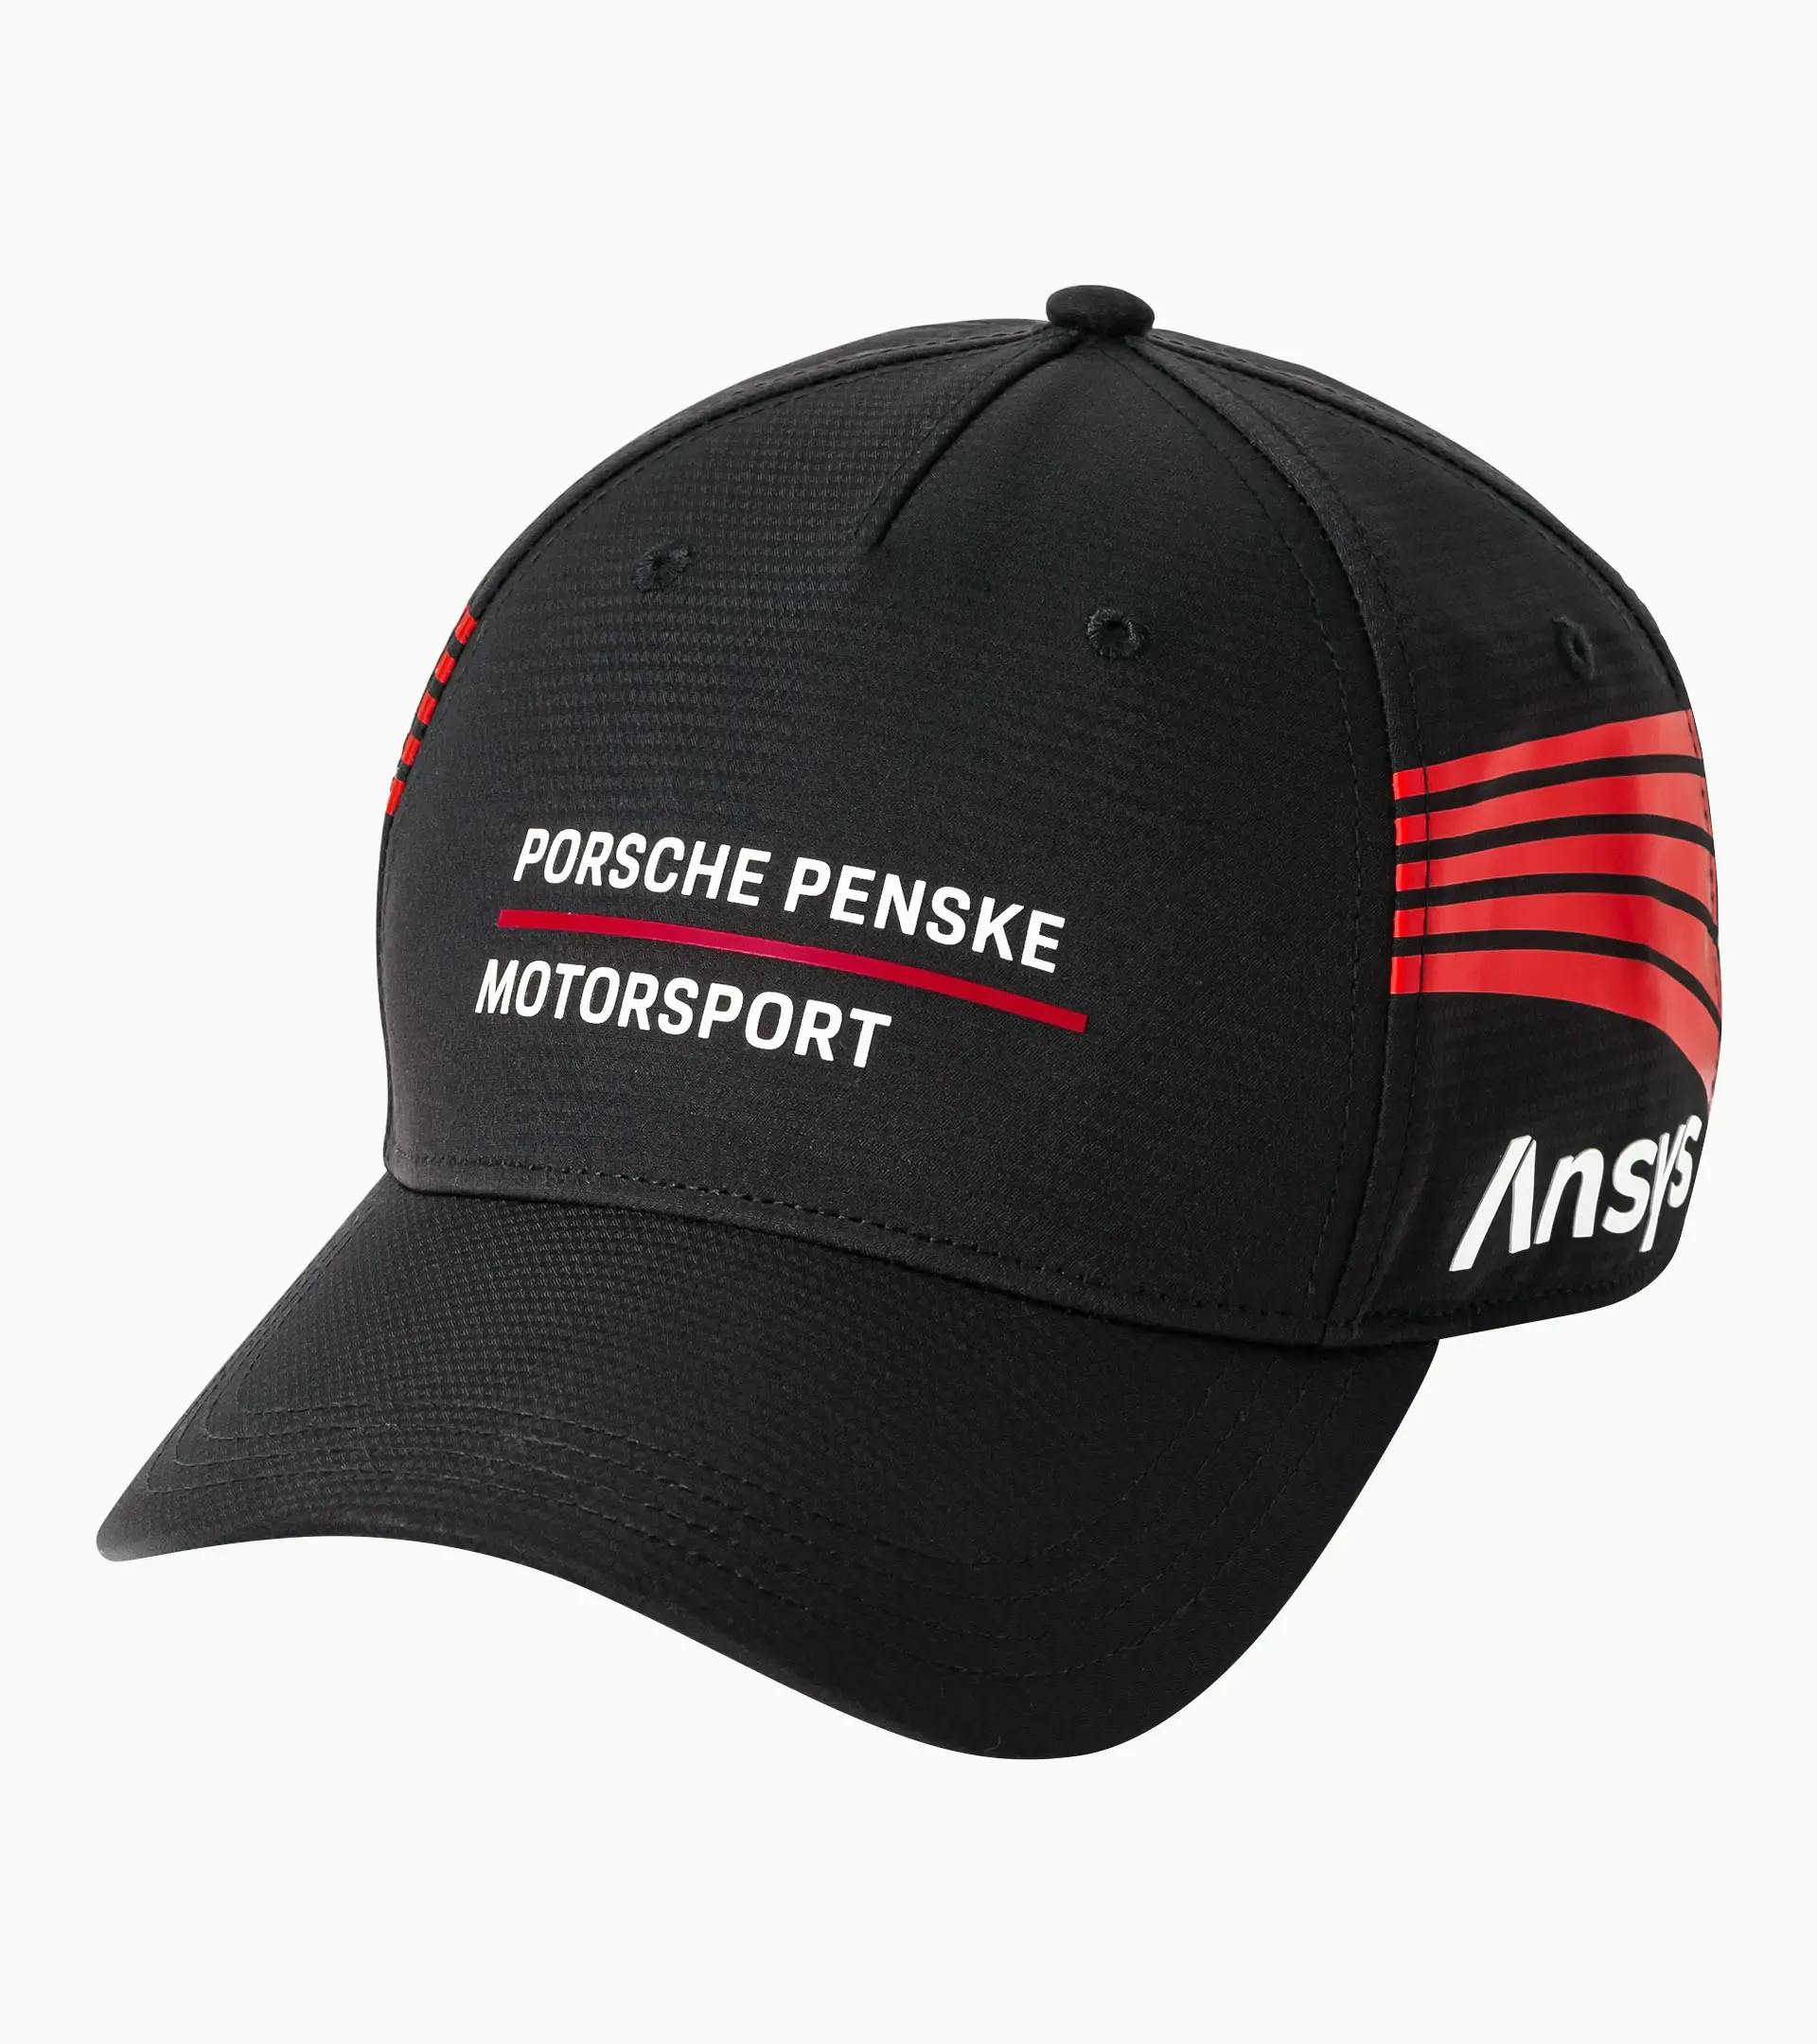 Casquette unisex – Porsche Penske Motorsport 1